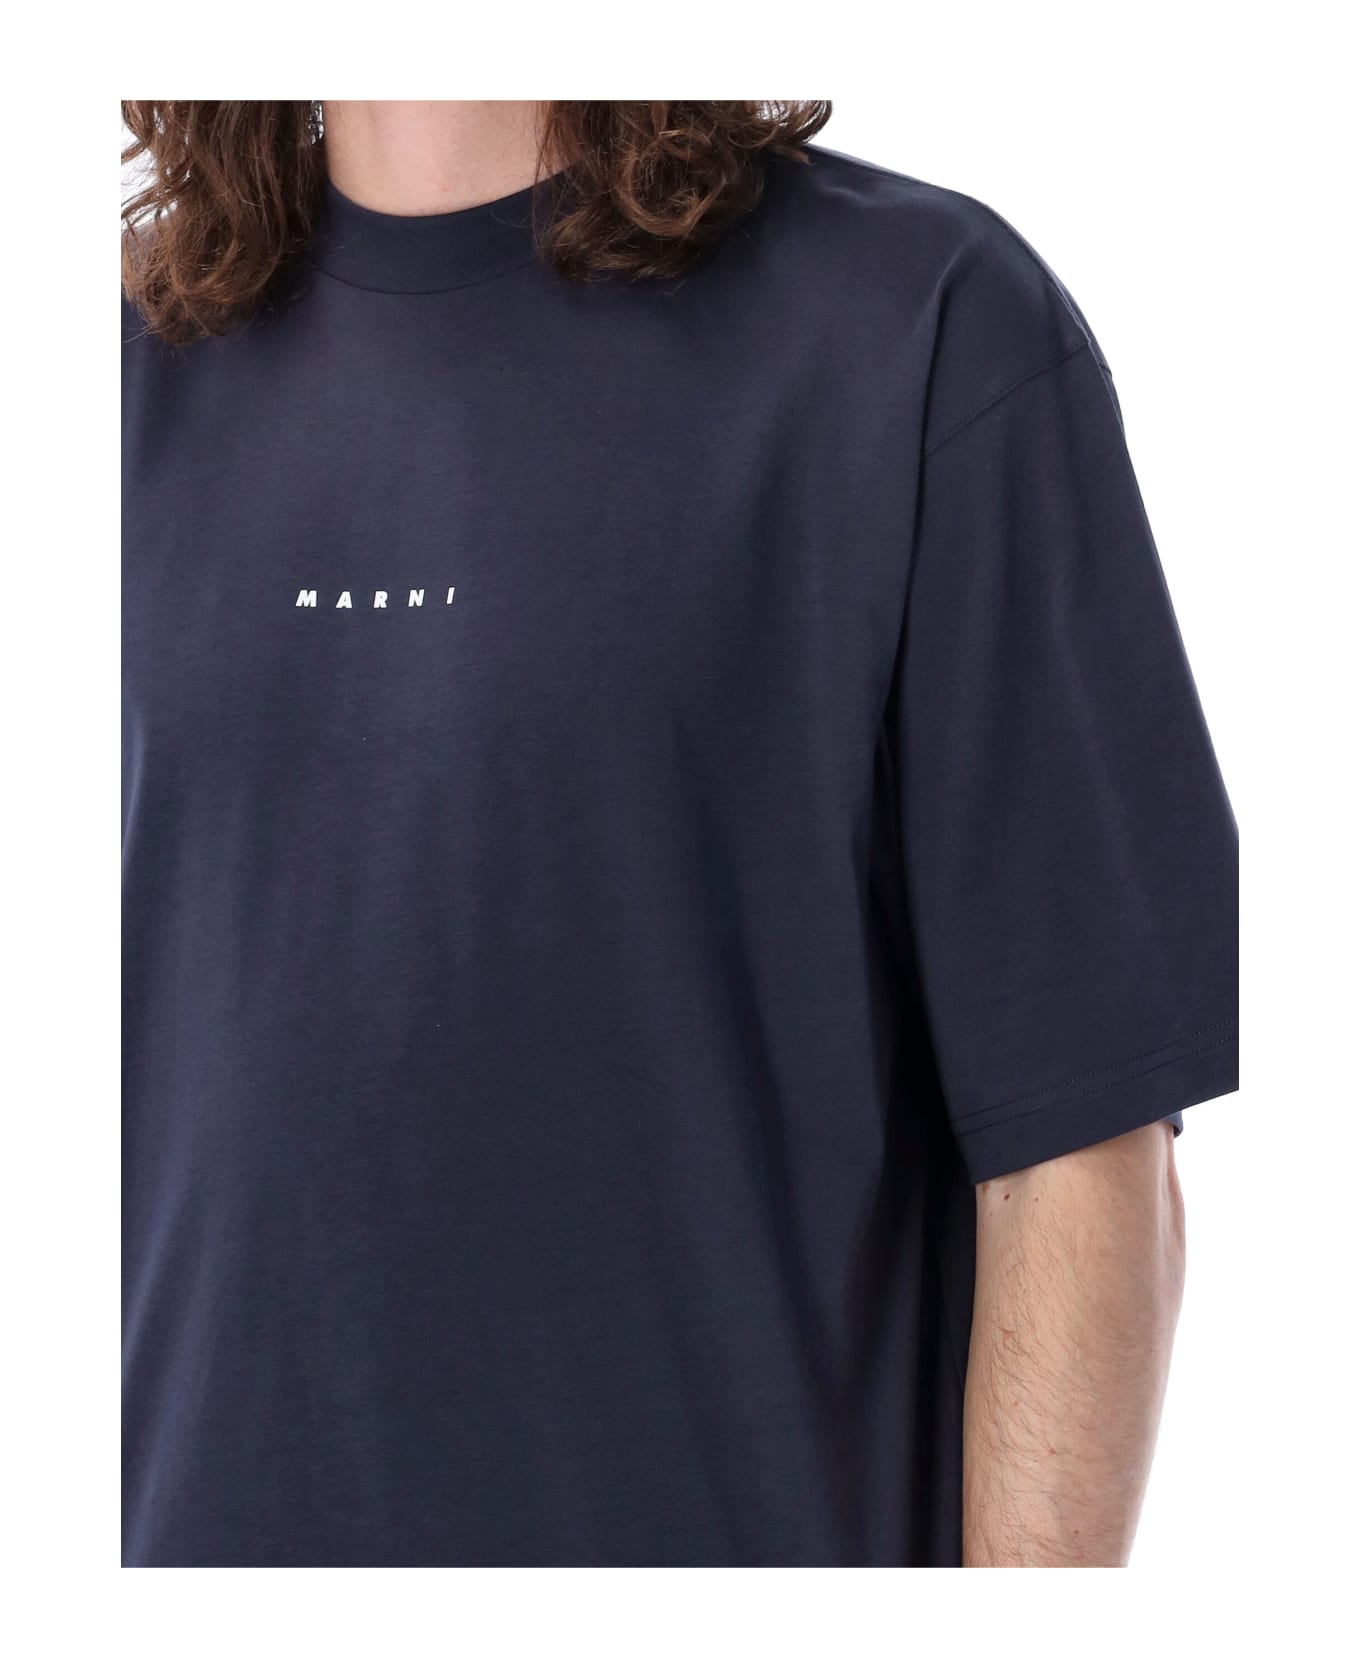 Marni Boxy T-shirt Marni Logo - NAVY シャツ